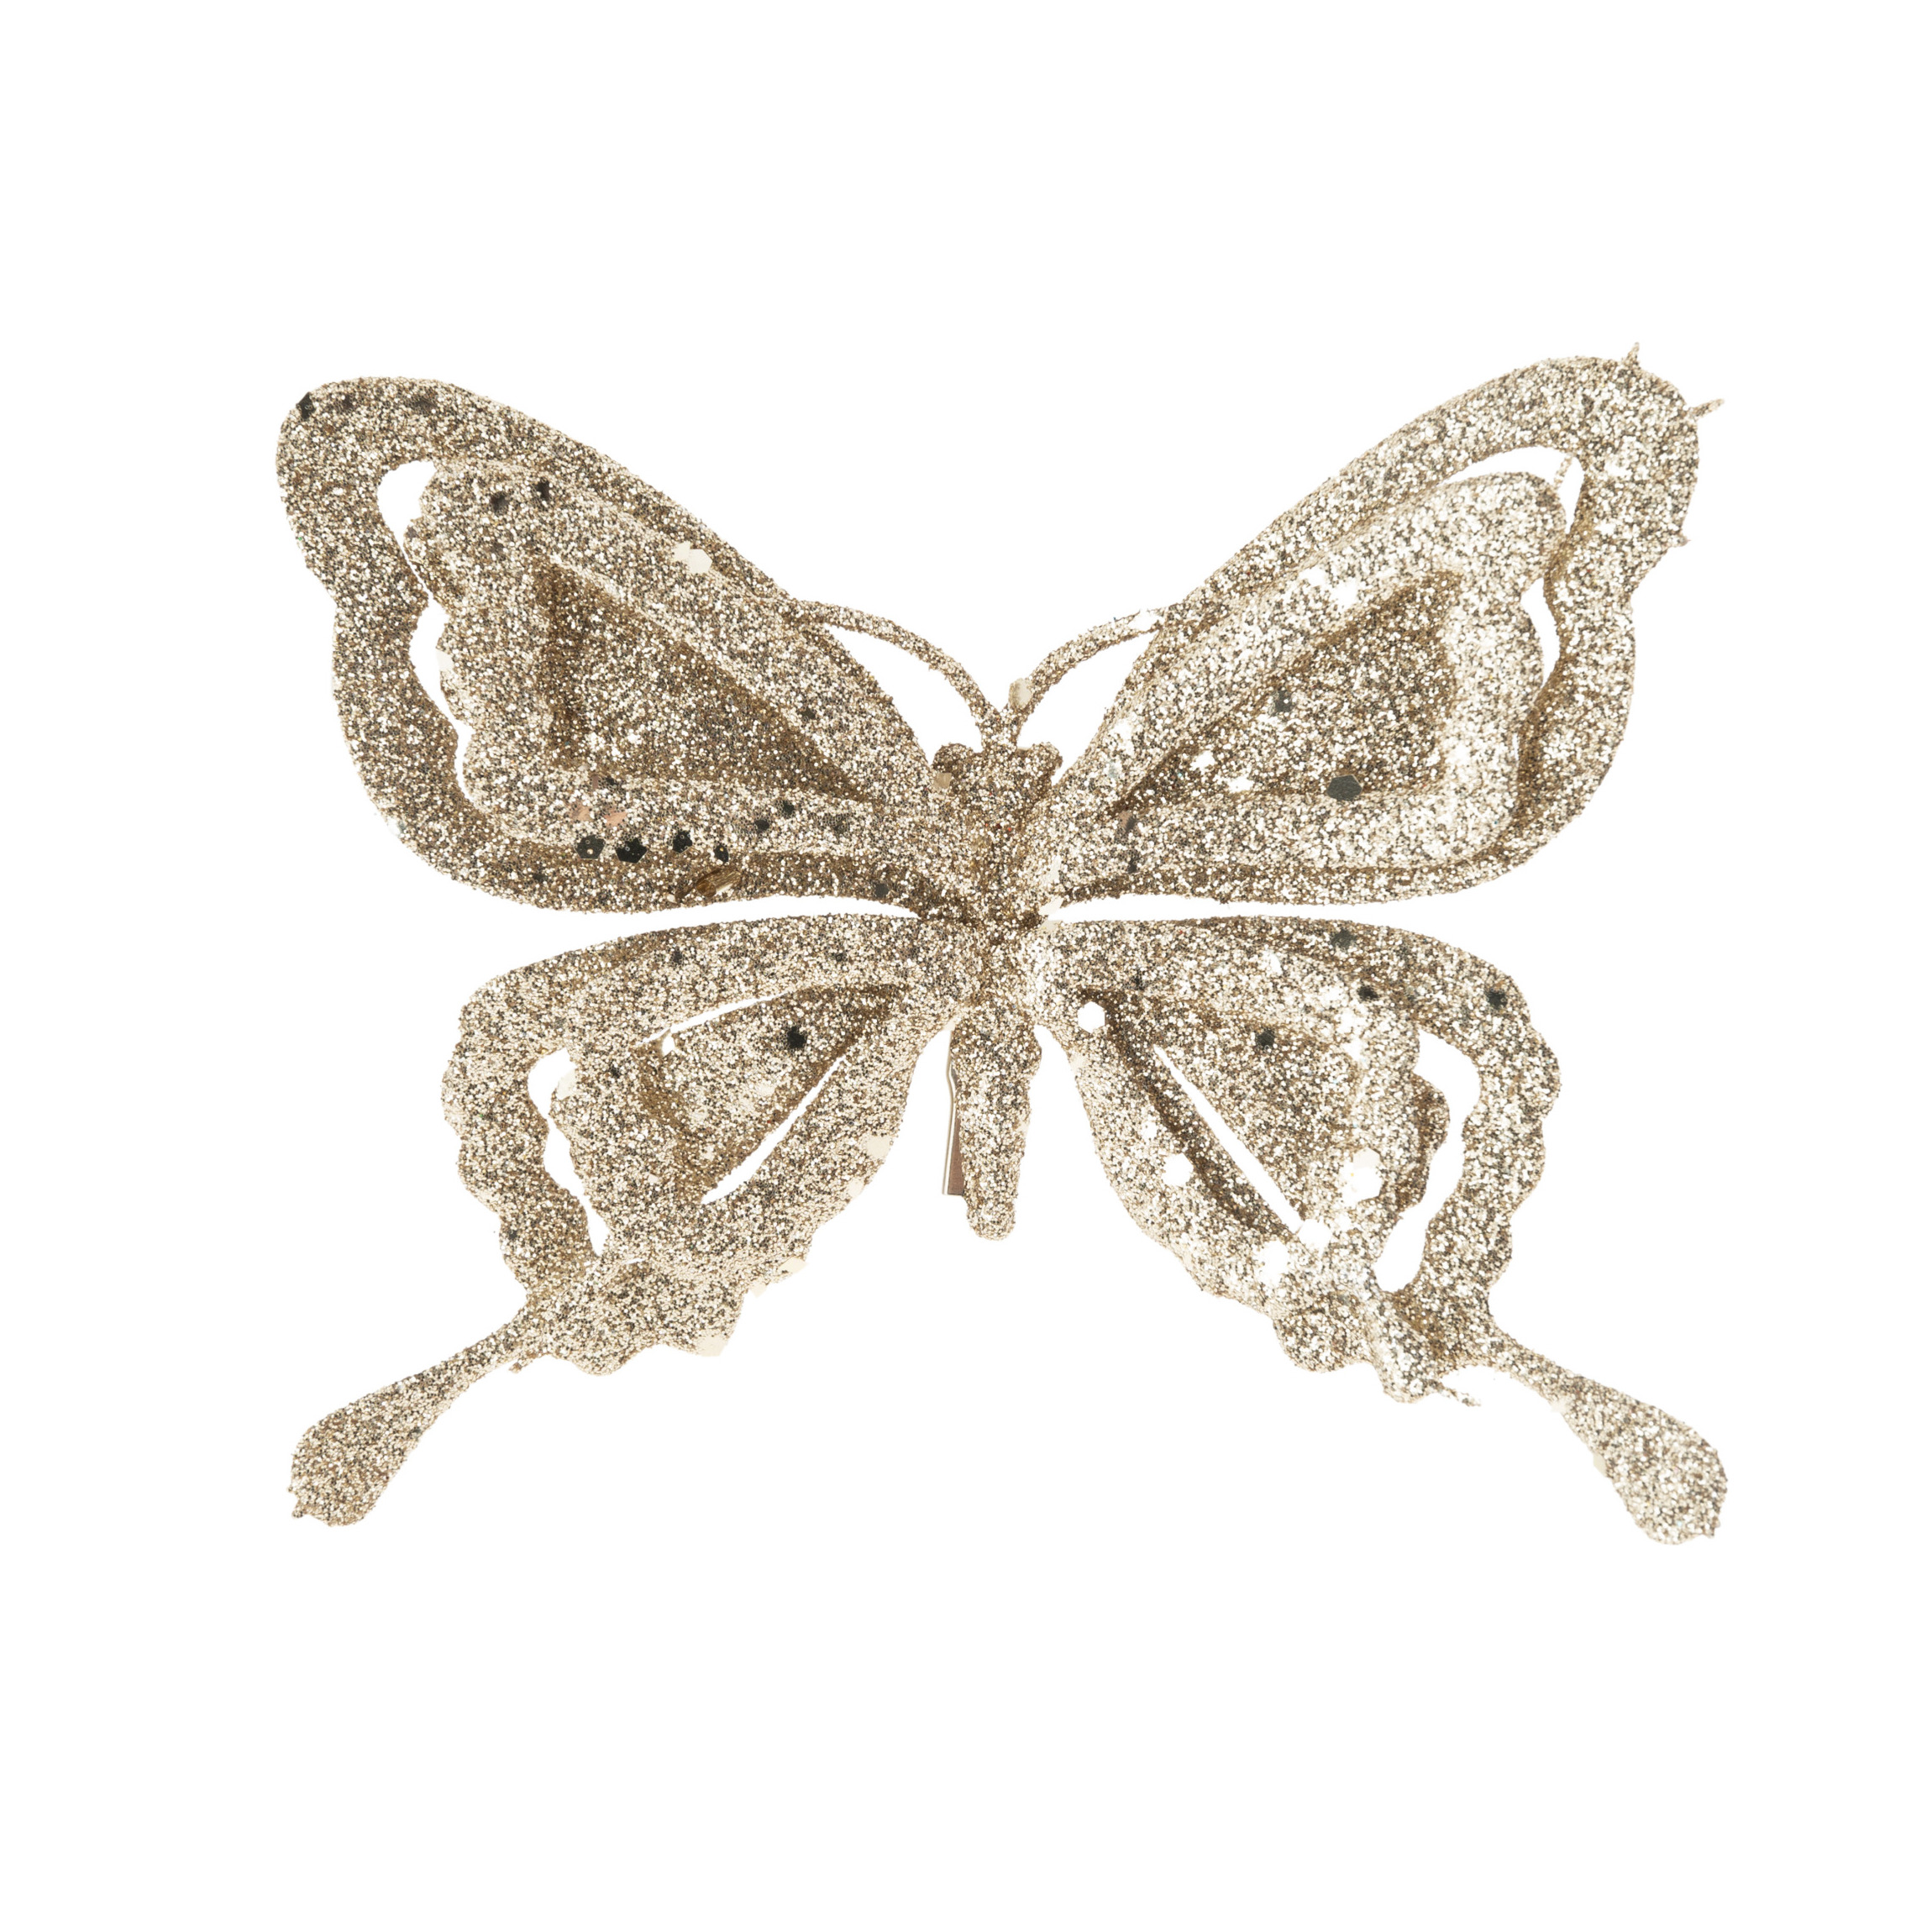 1x stuks decoratie vlinders op clip glitter champagne 14 cm